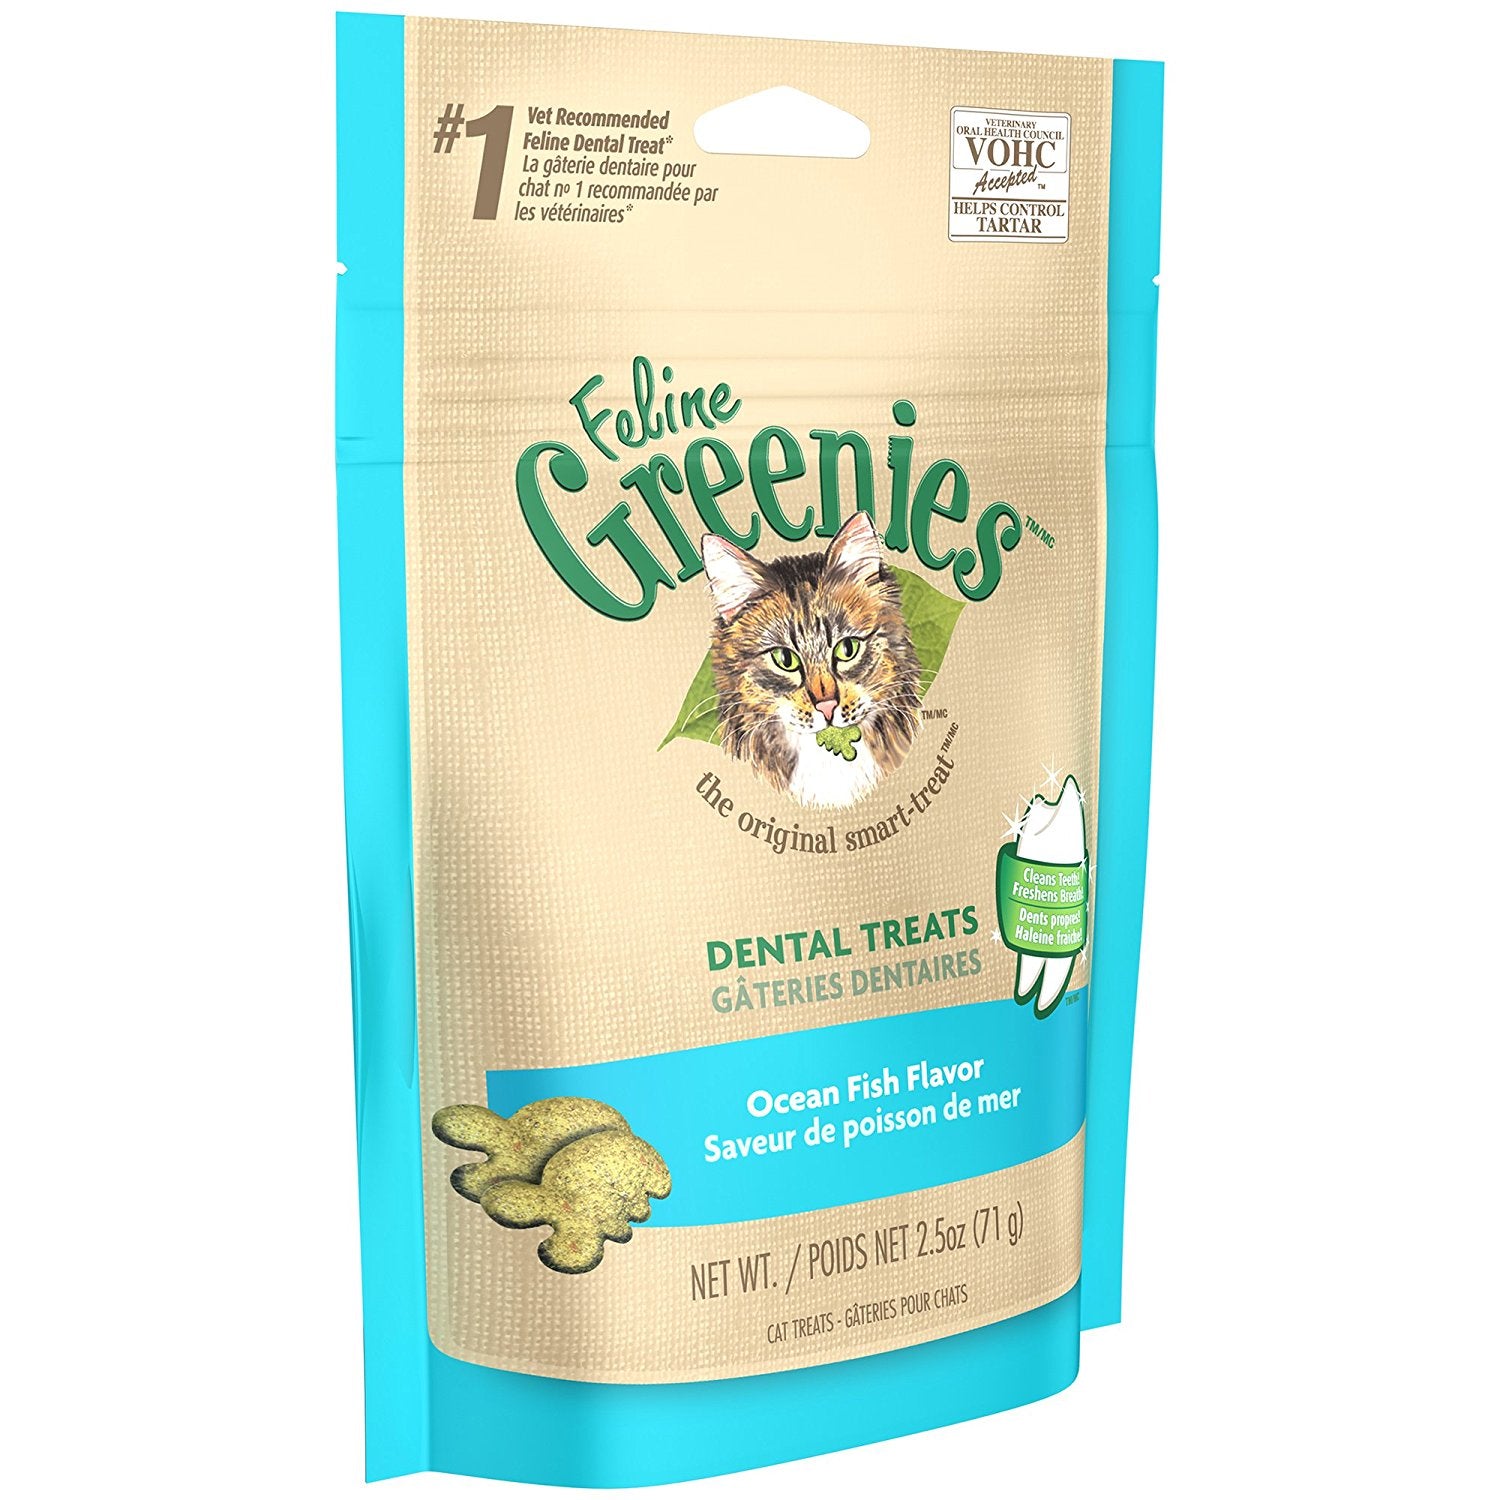 Nutro 13968 Feline Greenies Dental Treats, Ocean Fish Flavor, 2.5 Oz